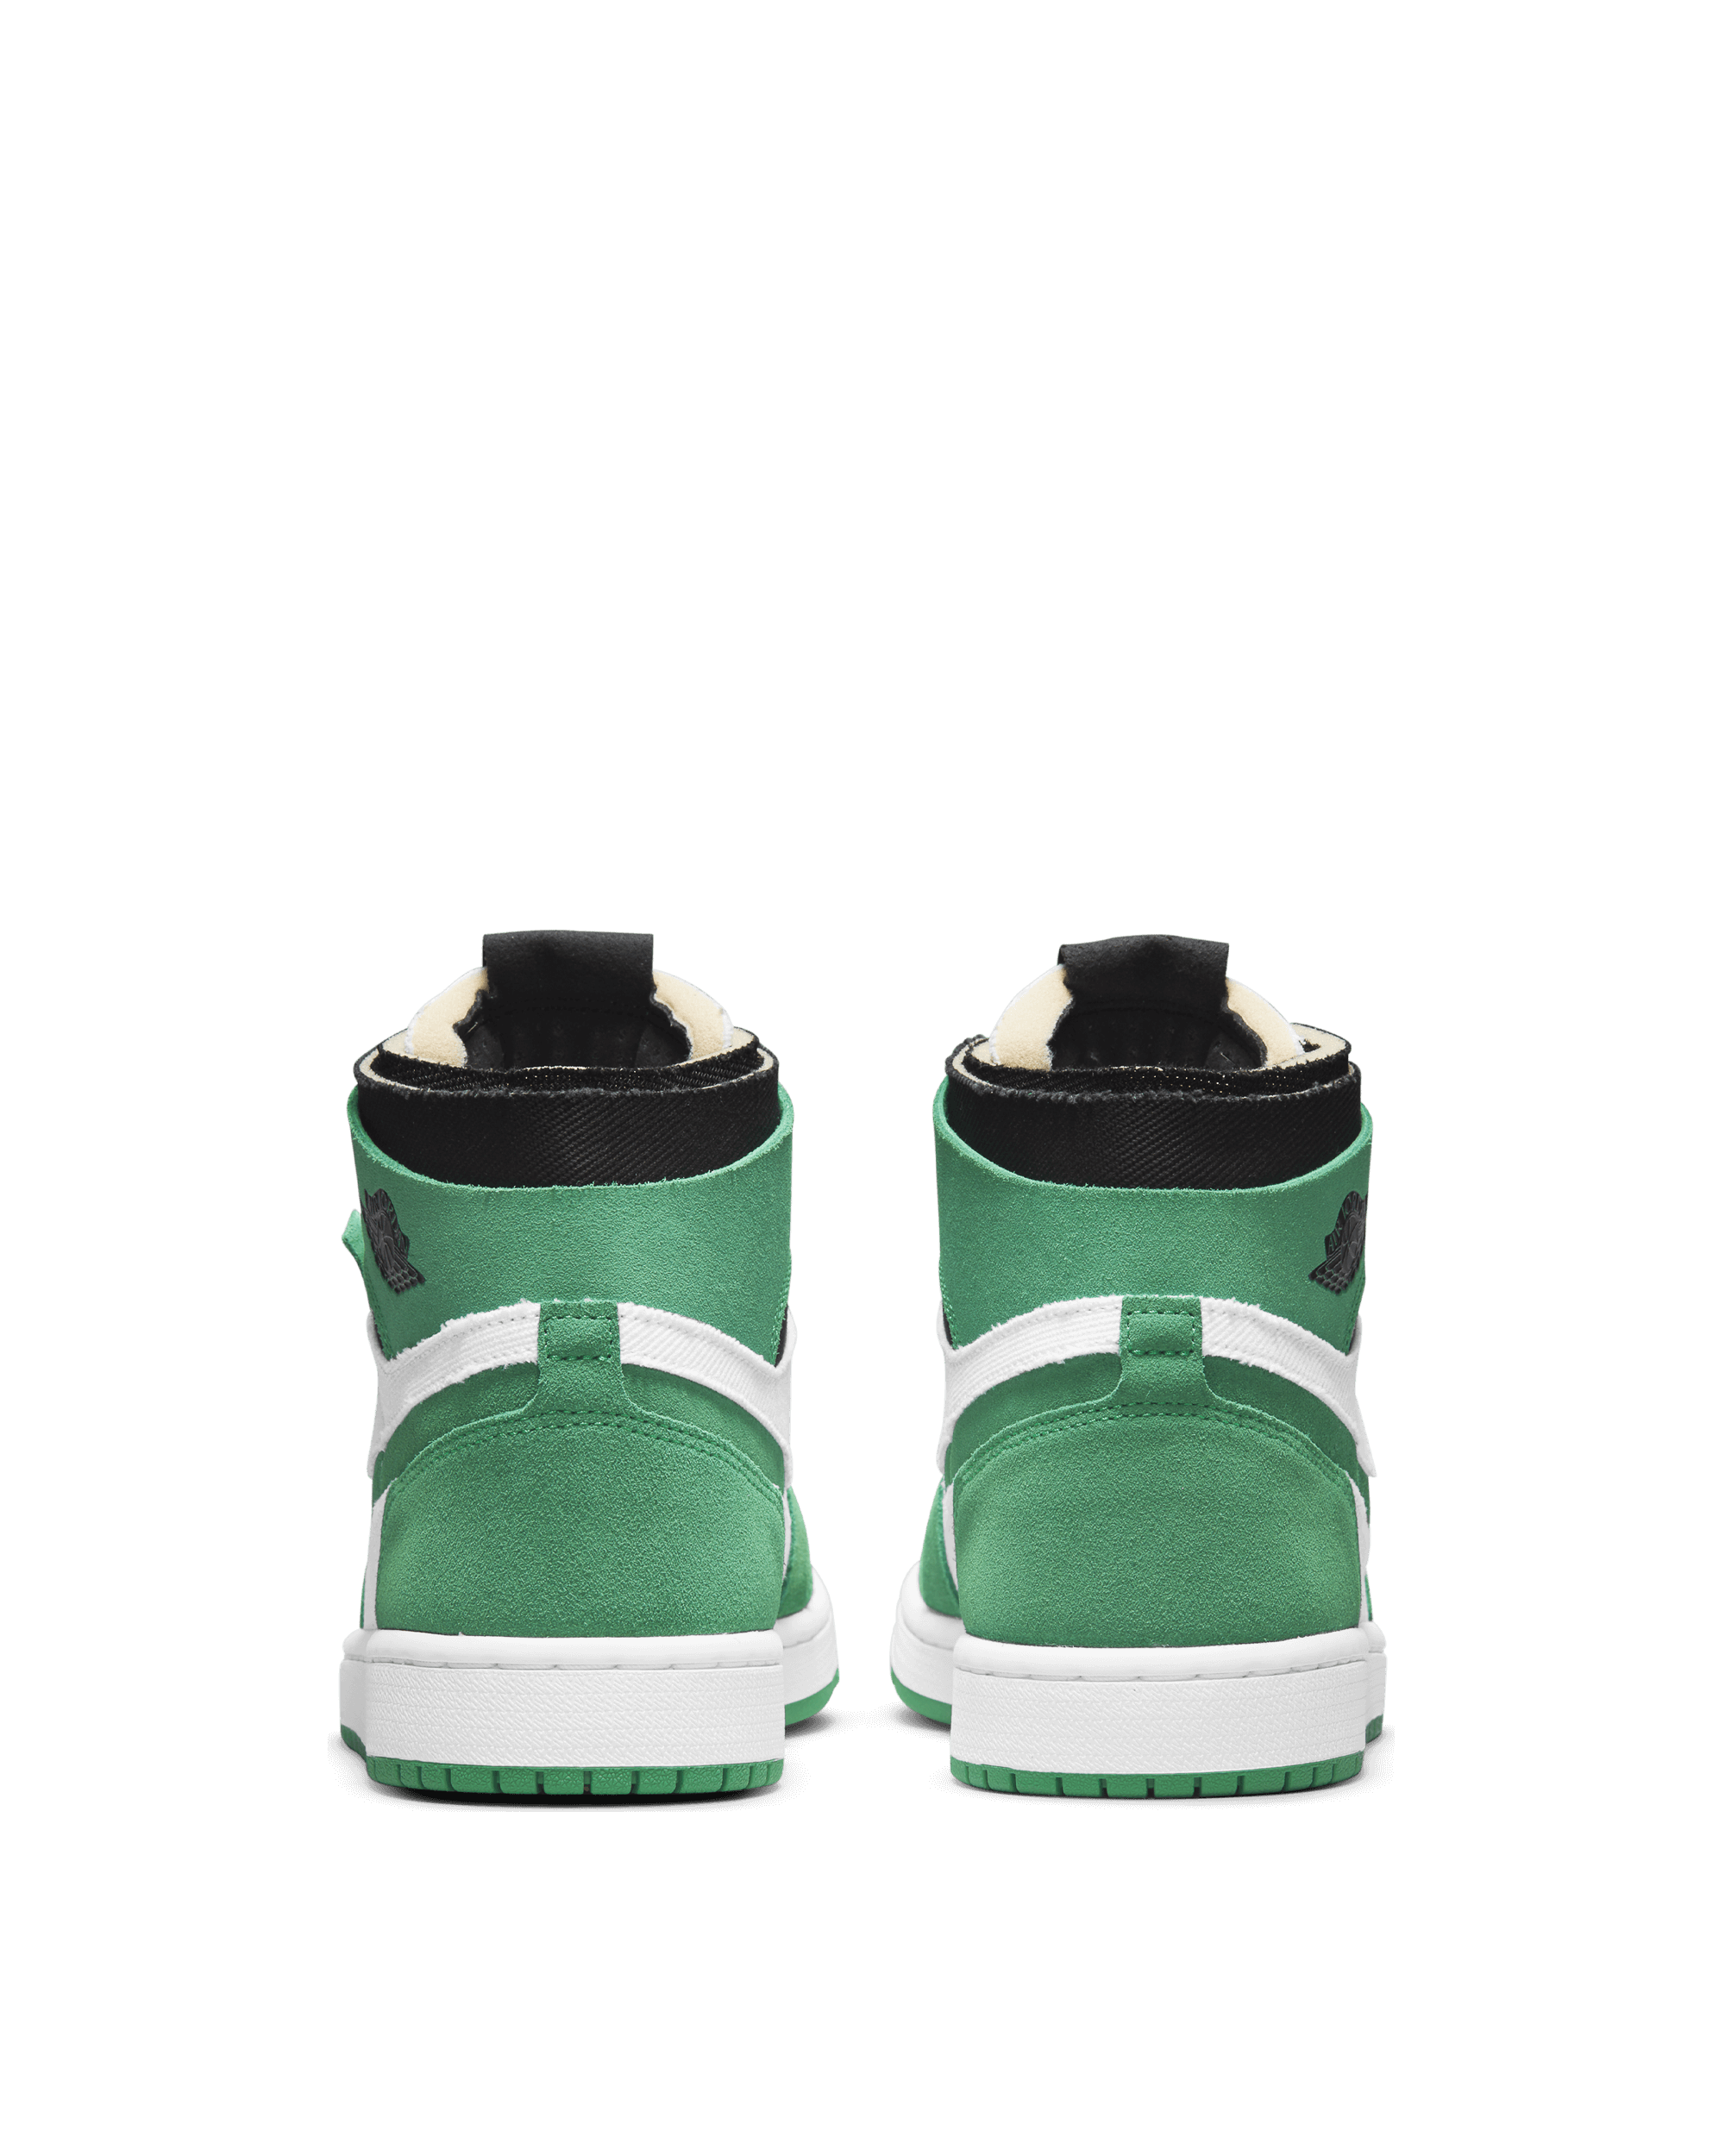 Nike Jordan Wmns Air Jordan 1 Zooair Cmft Stadium Green/Black Sneakers High CT0979-300